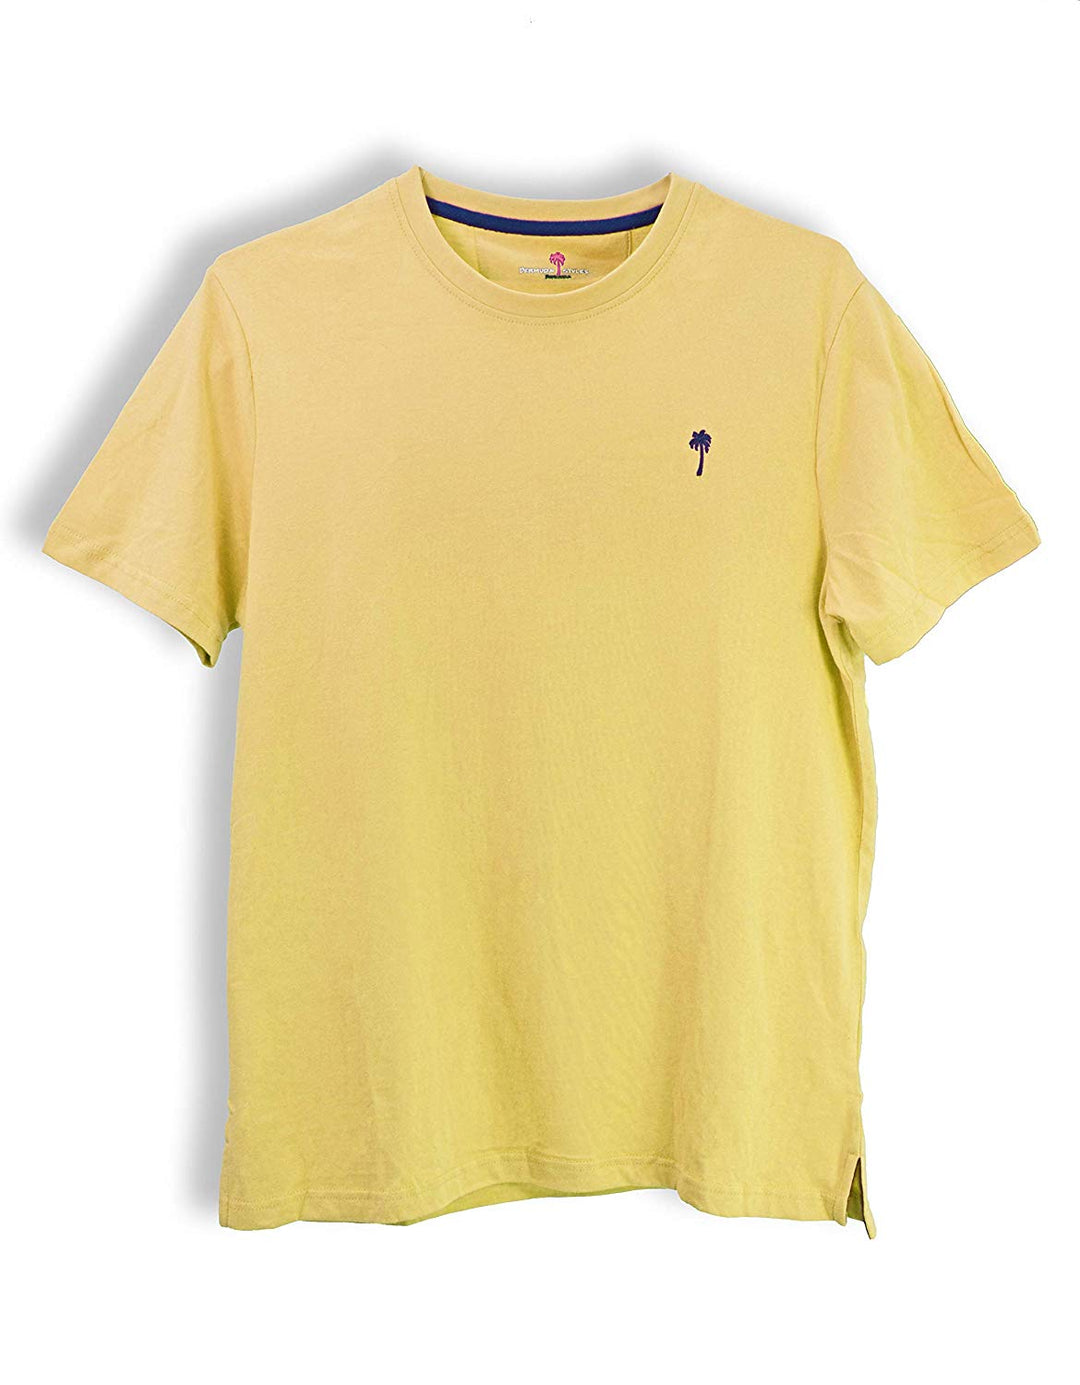 Bermuda Styles Crewneck T-Shirt